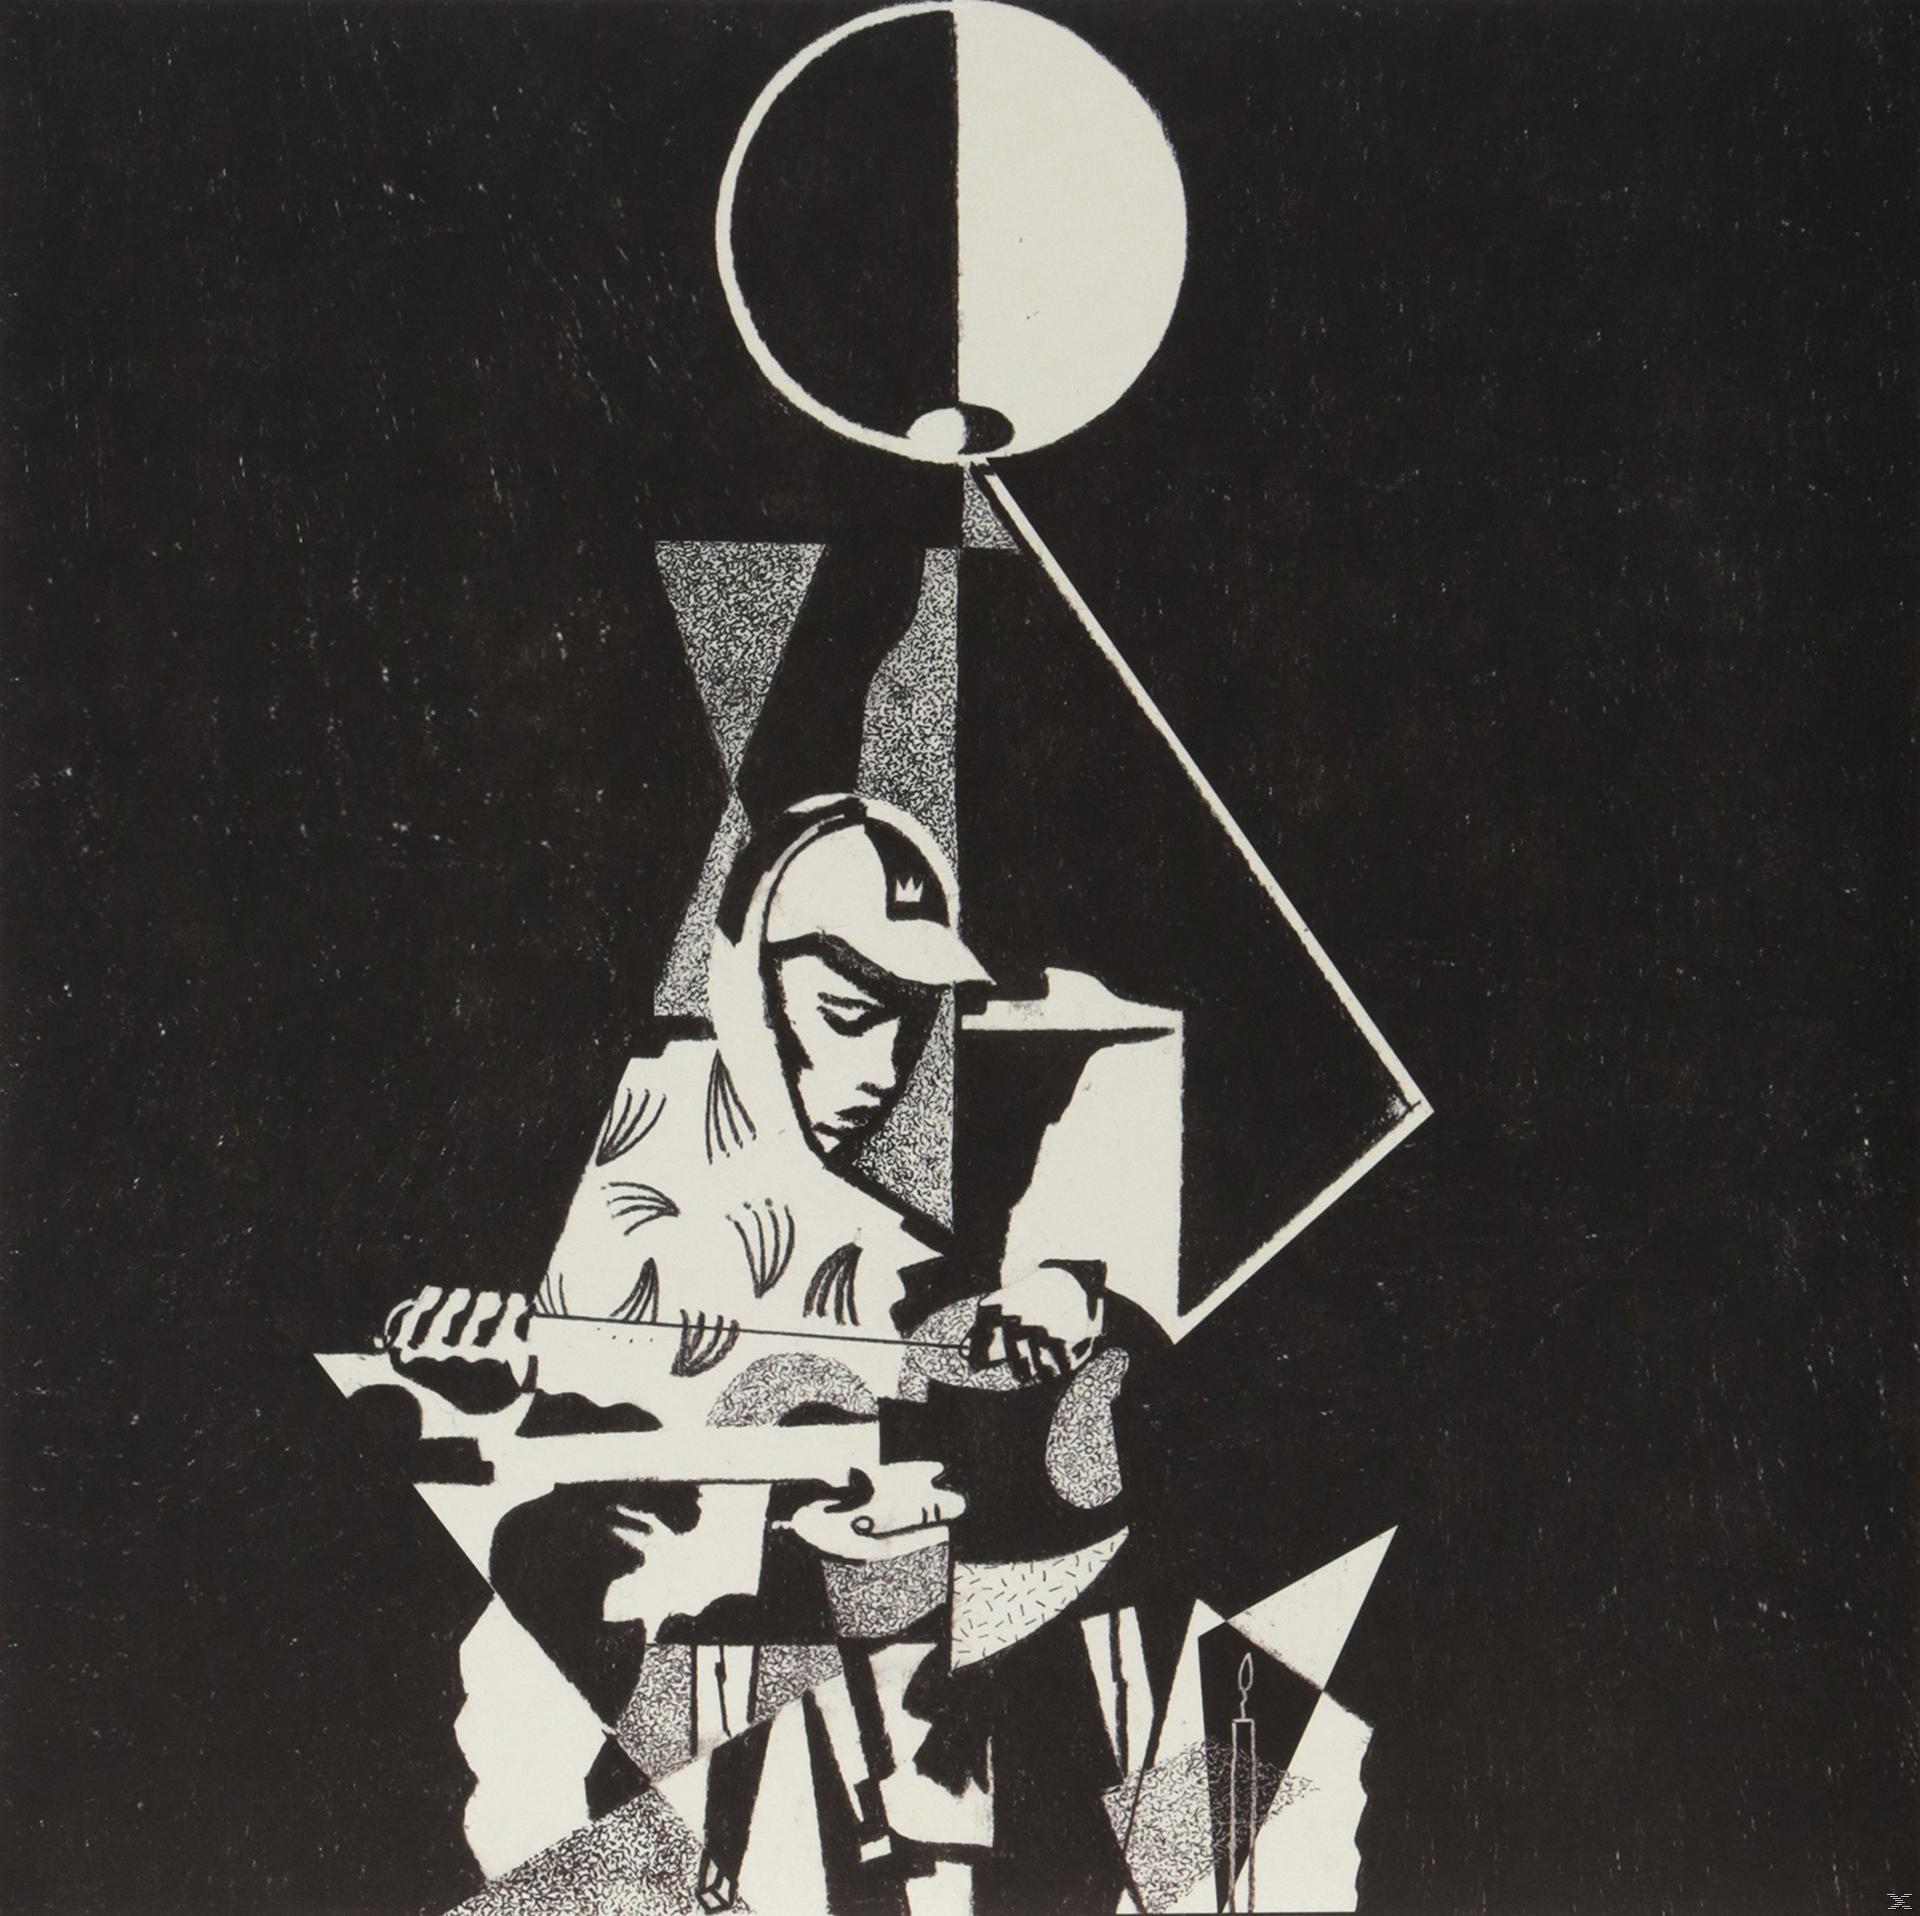 King Krule - Six Feet Beneath (LP The - + Download) Moon